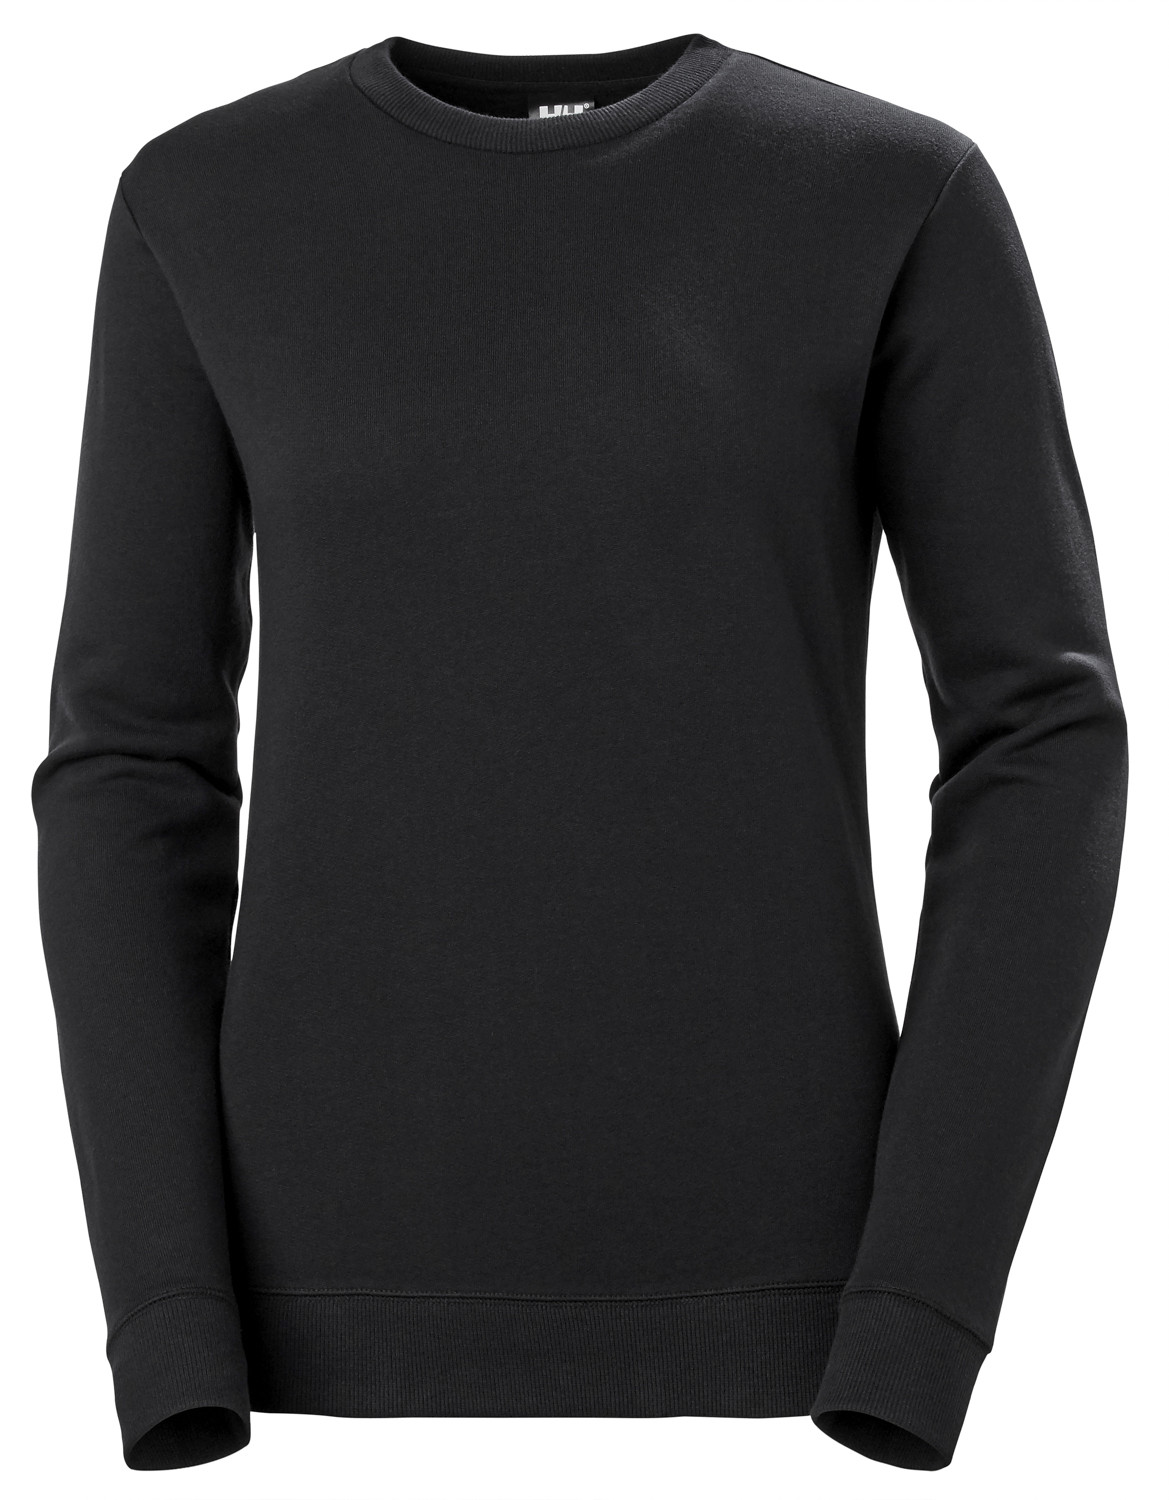 Кофта Helly Hansen W Manchester Sweater - 79209 (Black)